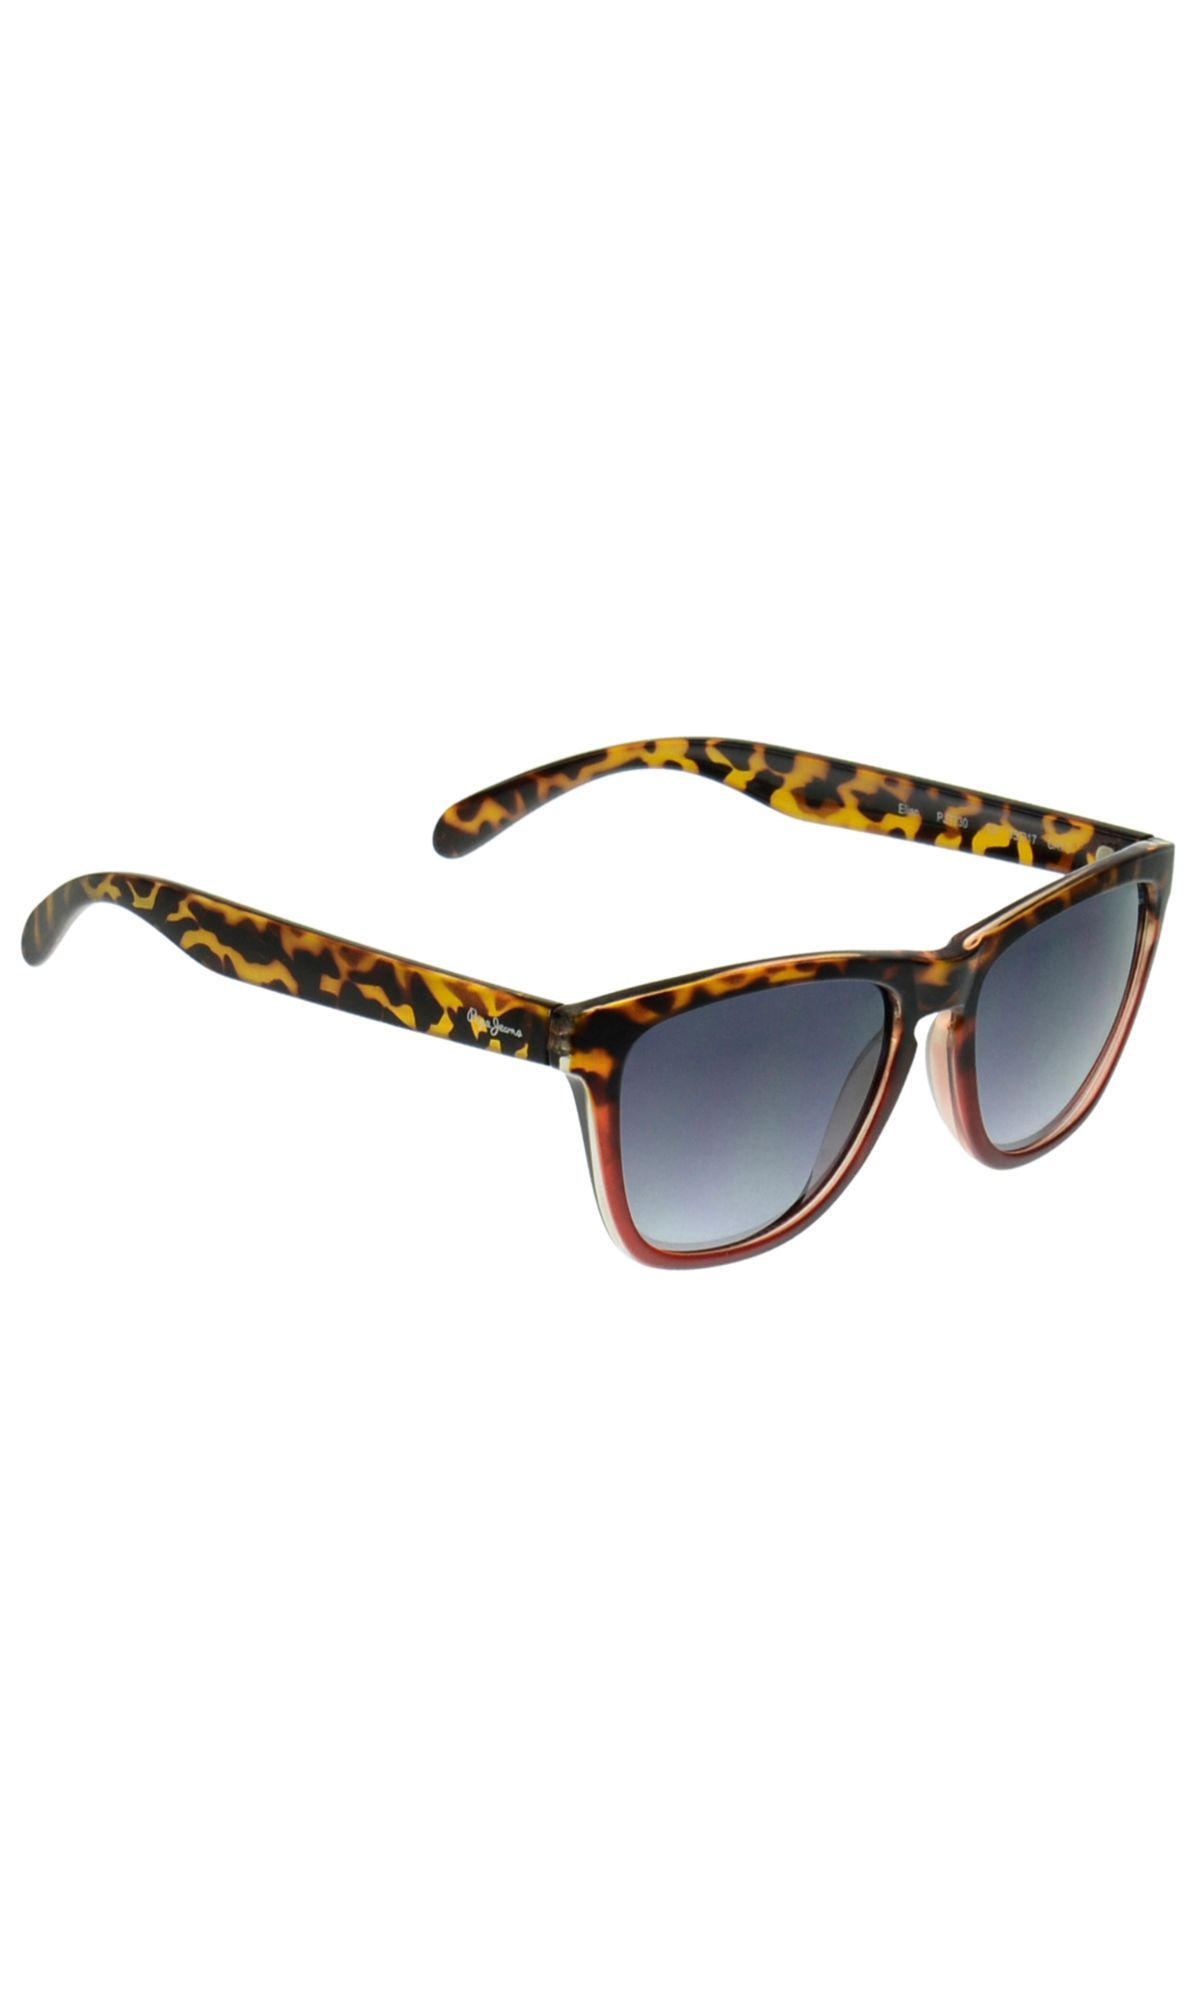 Buy Printed Wayfarer Sunglasses with Full Rim | Splash UAE